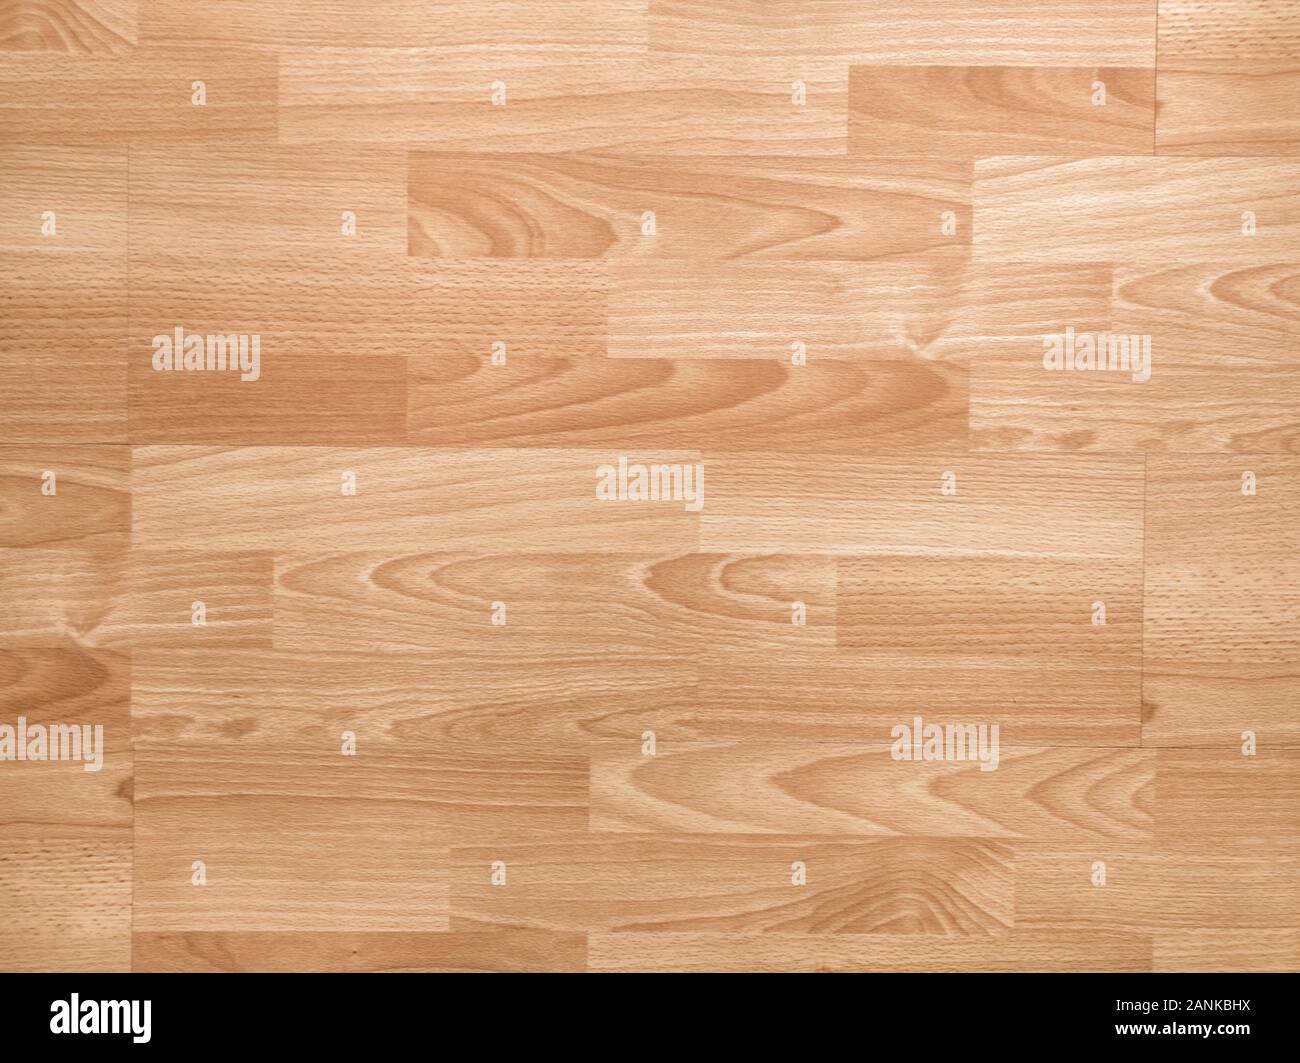 Parquet texture background - laminate floor, wooden look Stock Photo